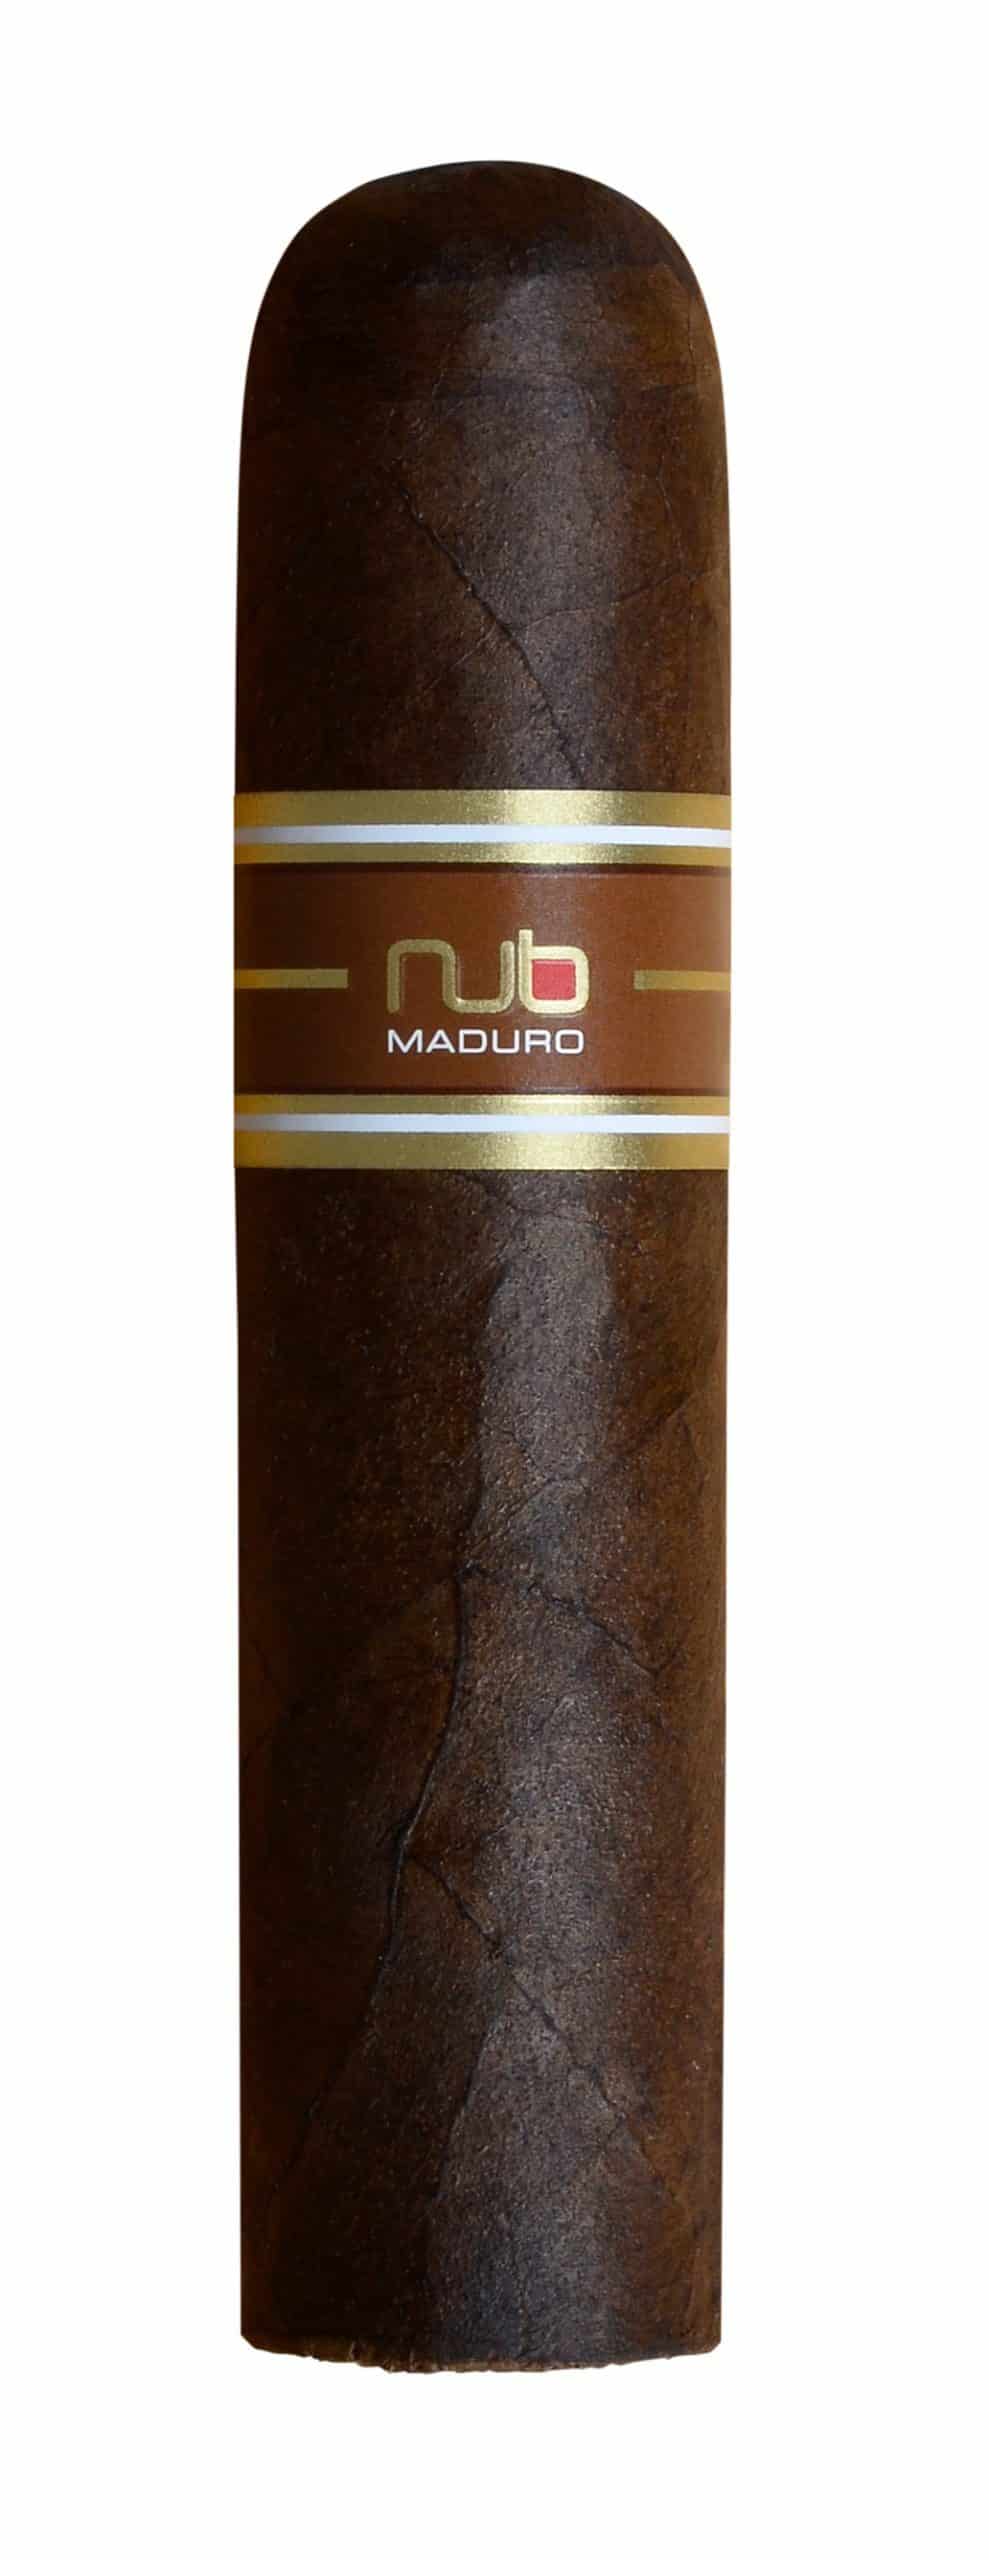 nub maduro single cigar